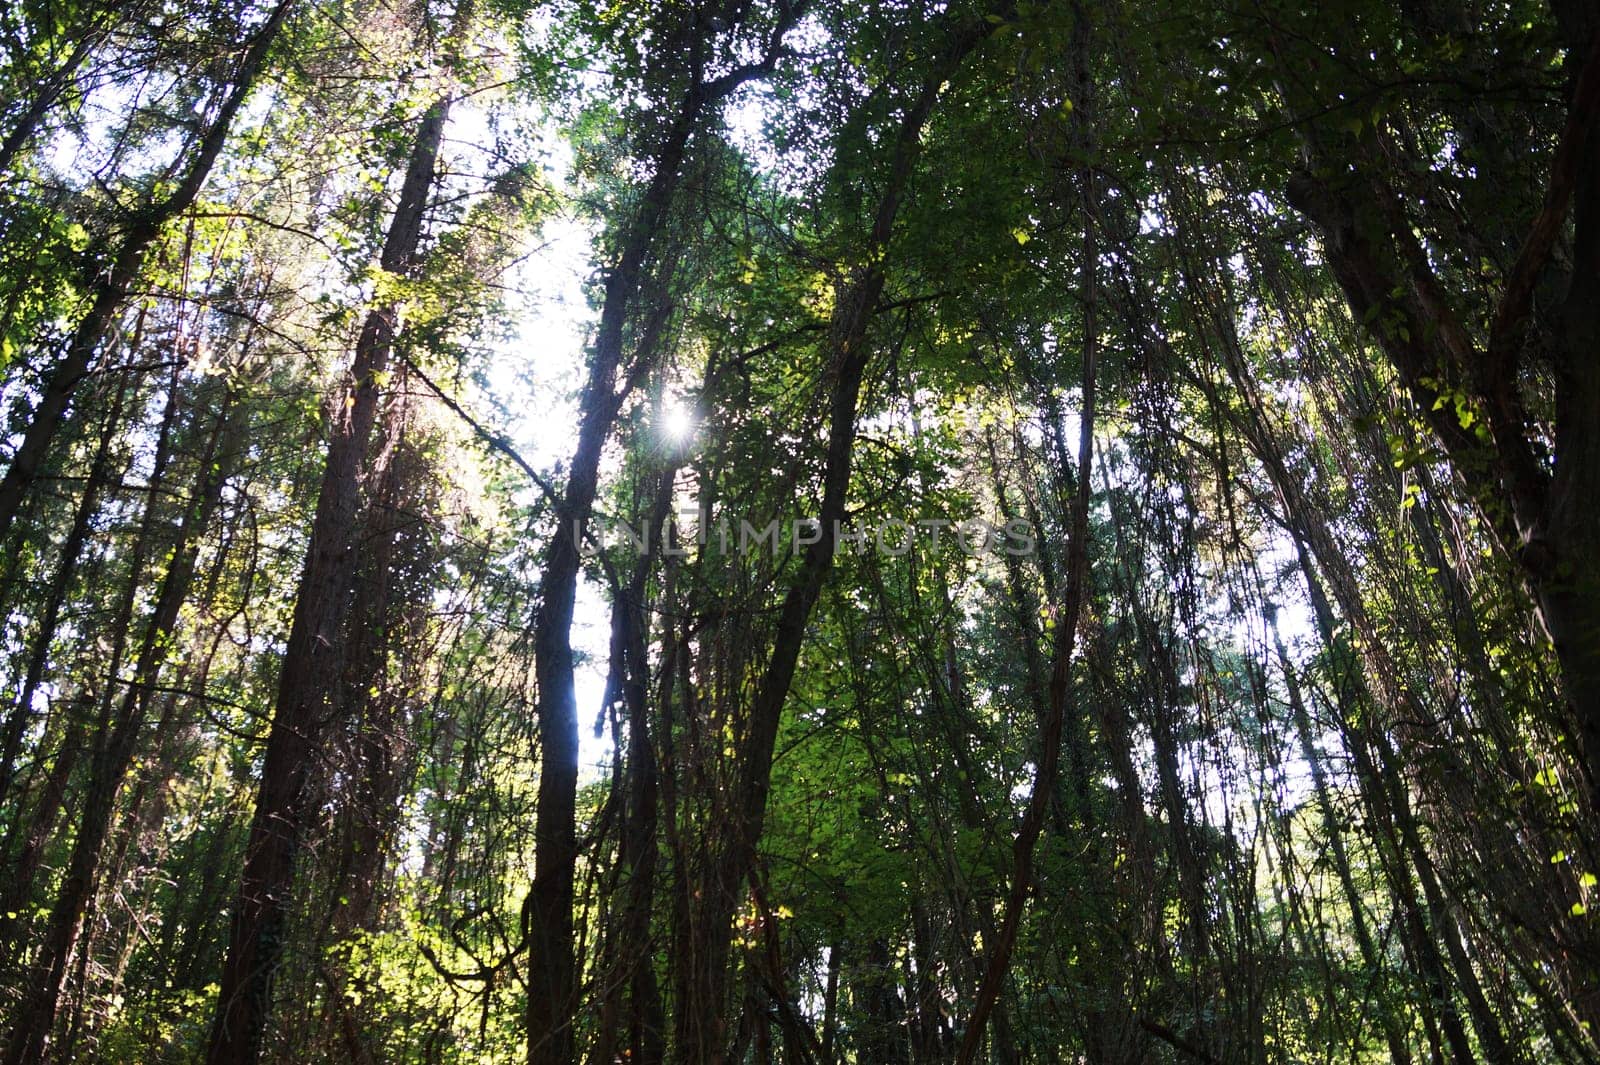 sunlight peeking through dense forest canopy leaves by Annado